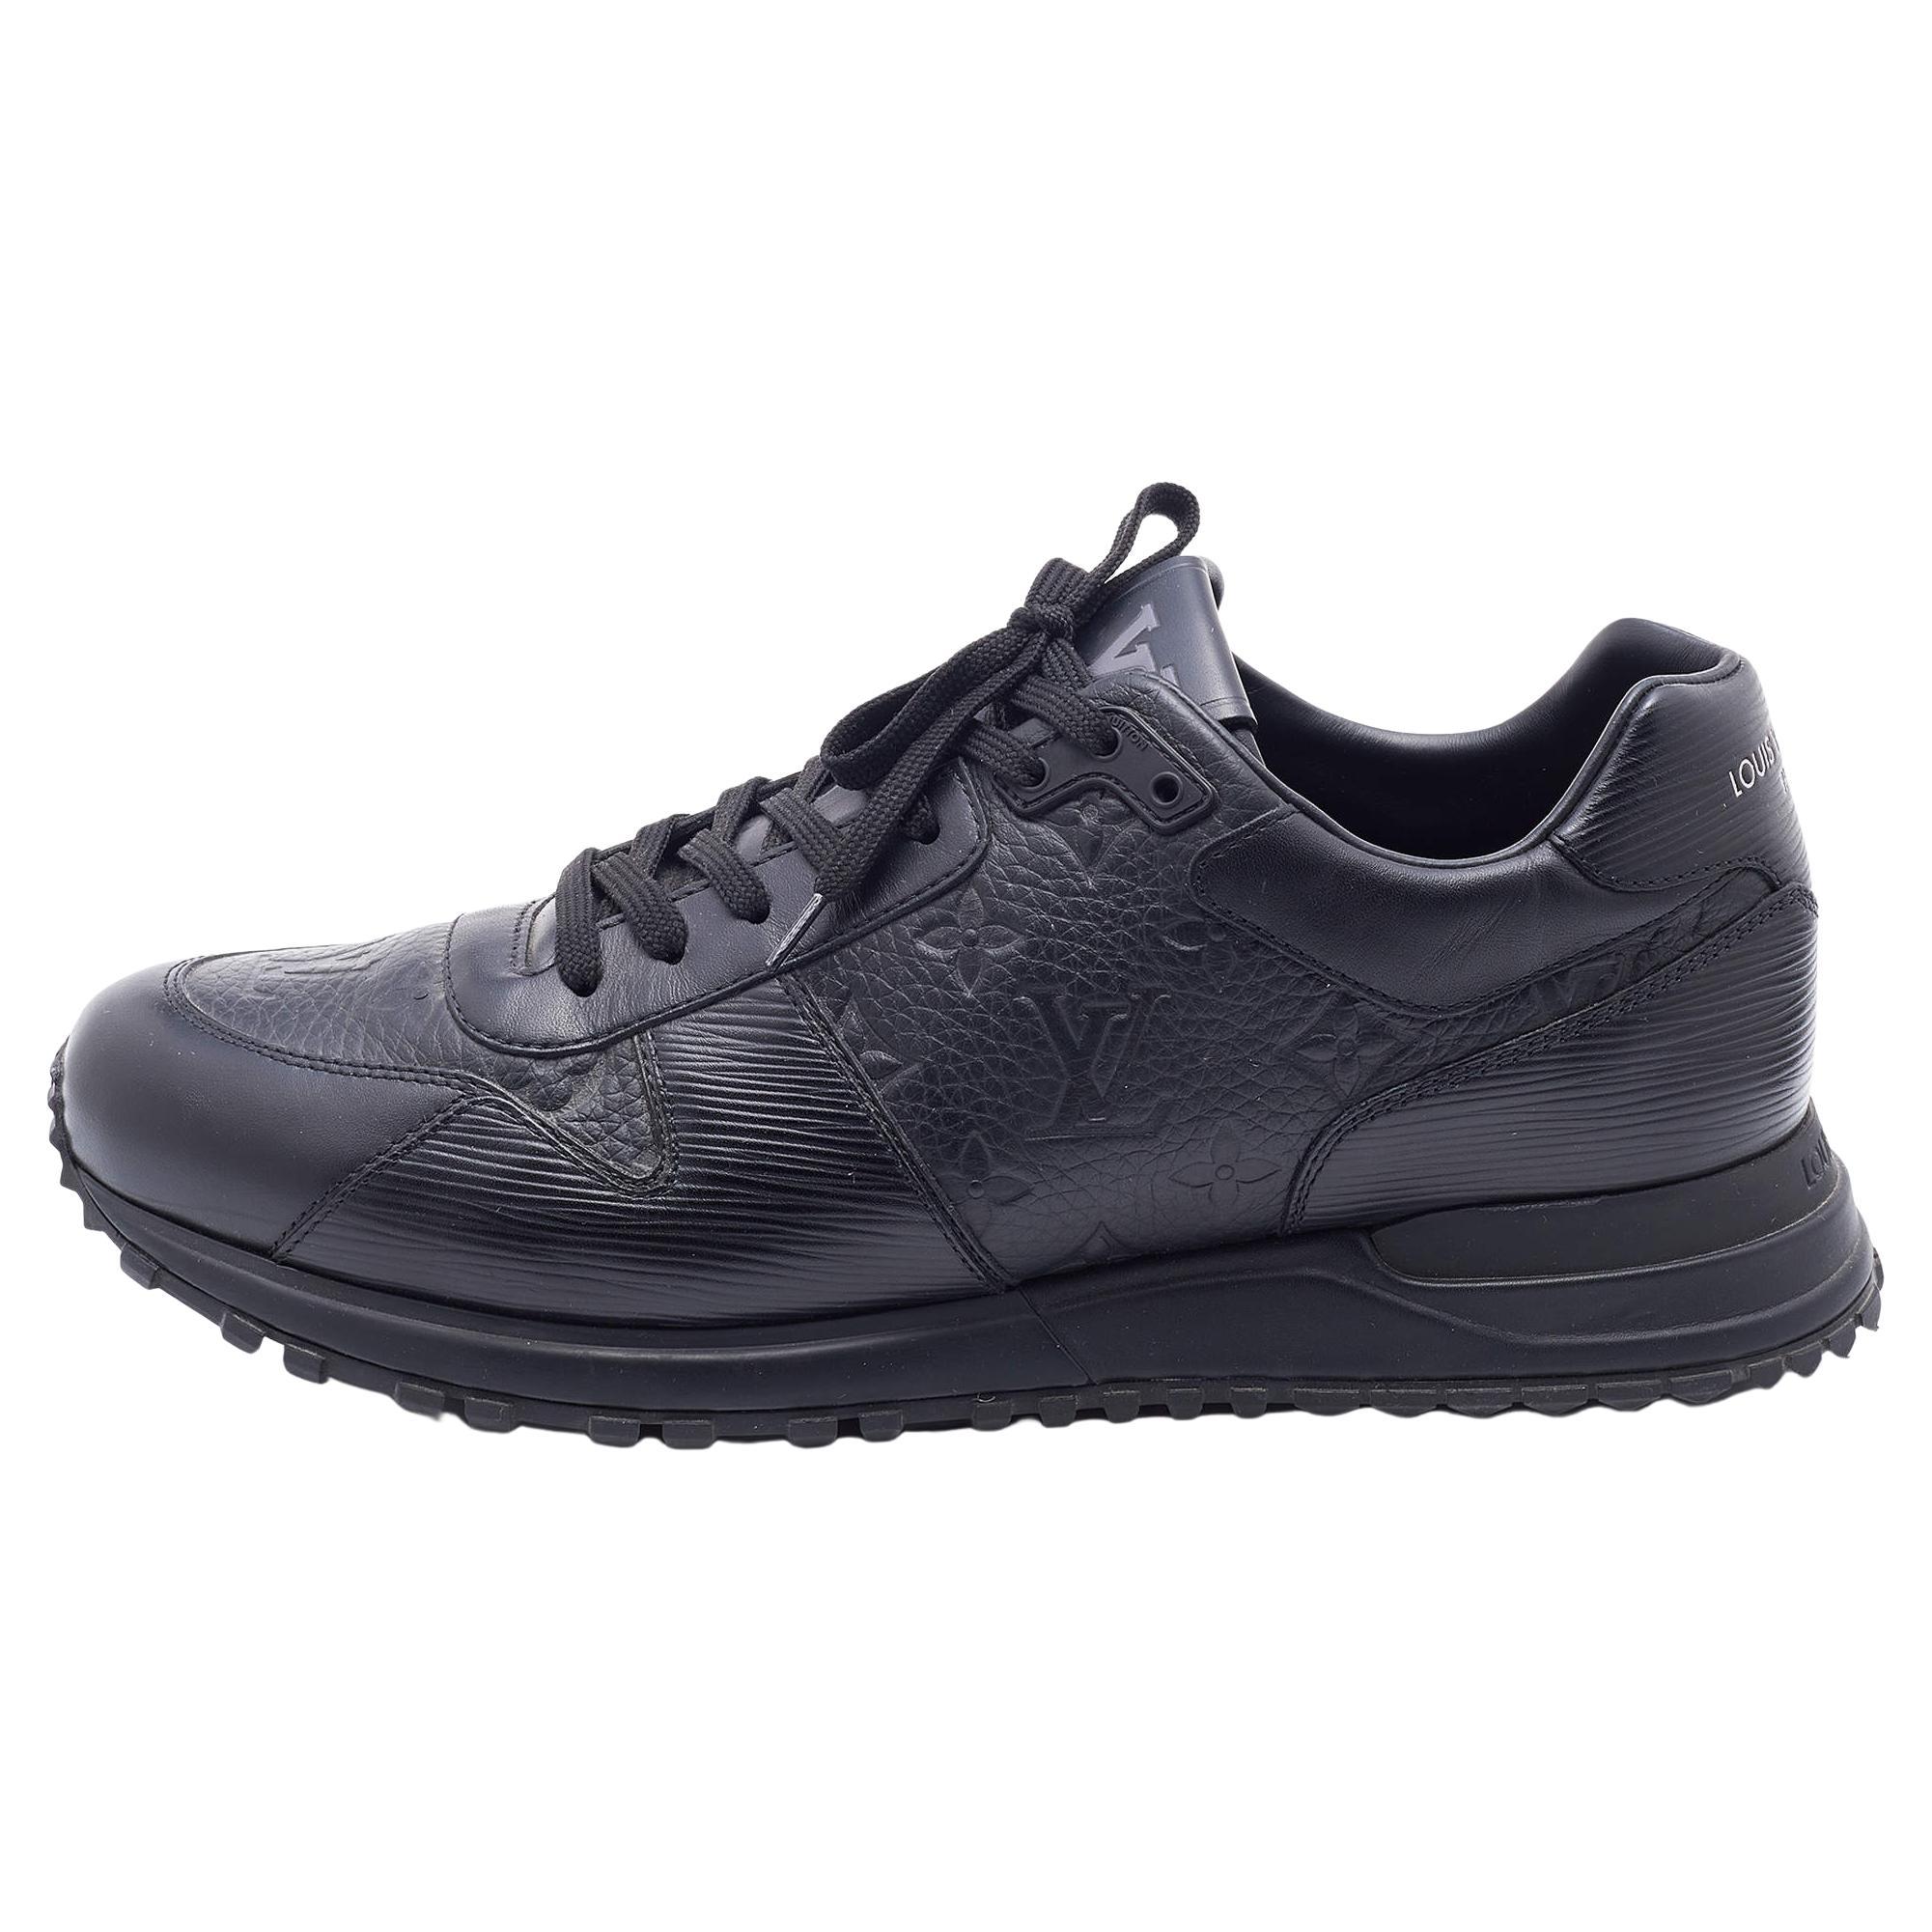 Louis Vuitton - Run Away Sneakers Trainers - Black - Women - Size: 38.5 - Luxury